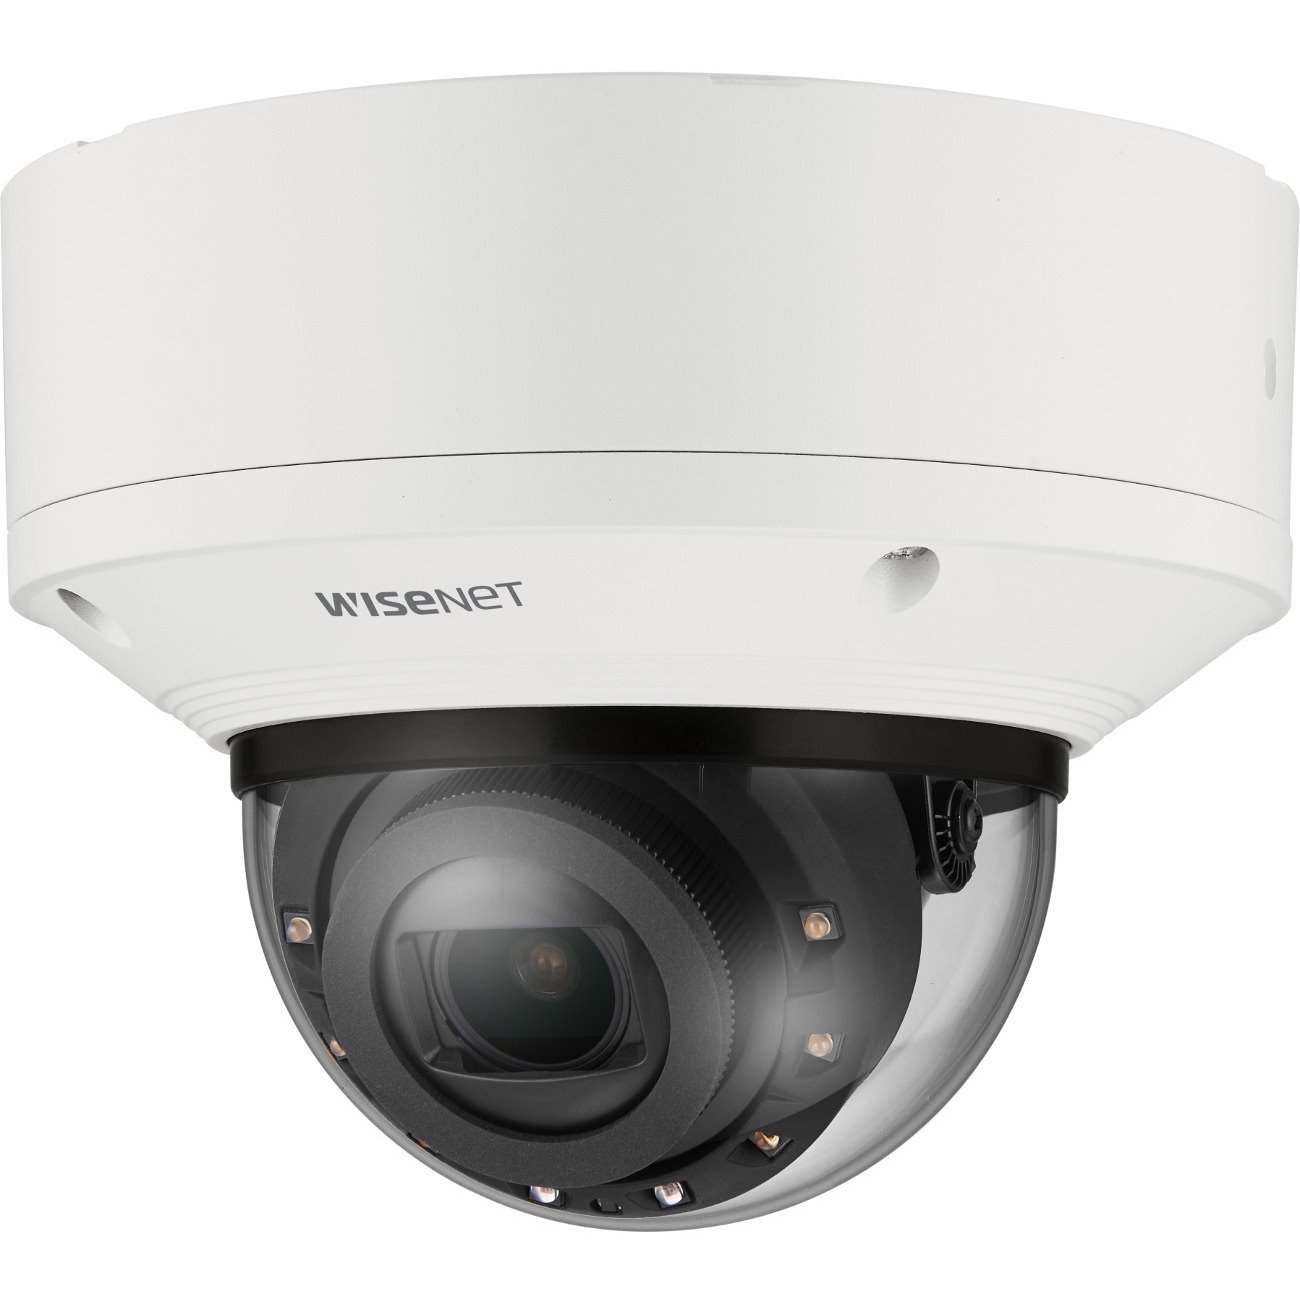 Wisenet XND-C6083RV 2 Megapixel Full HD Network Camera - Dome - White